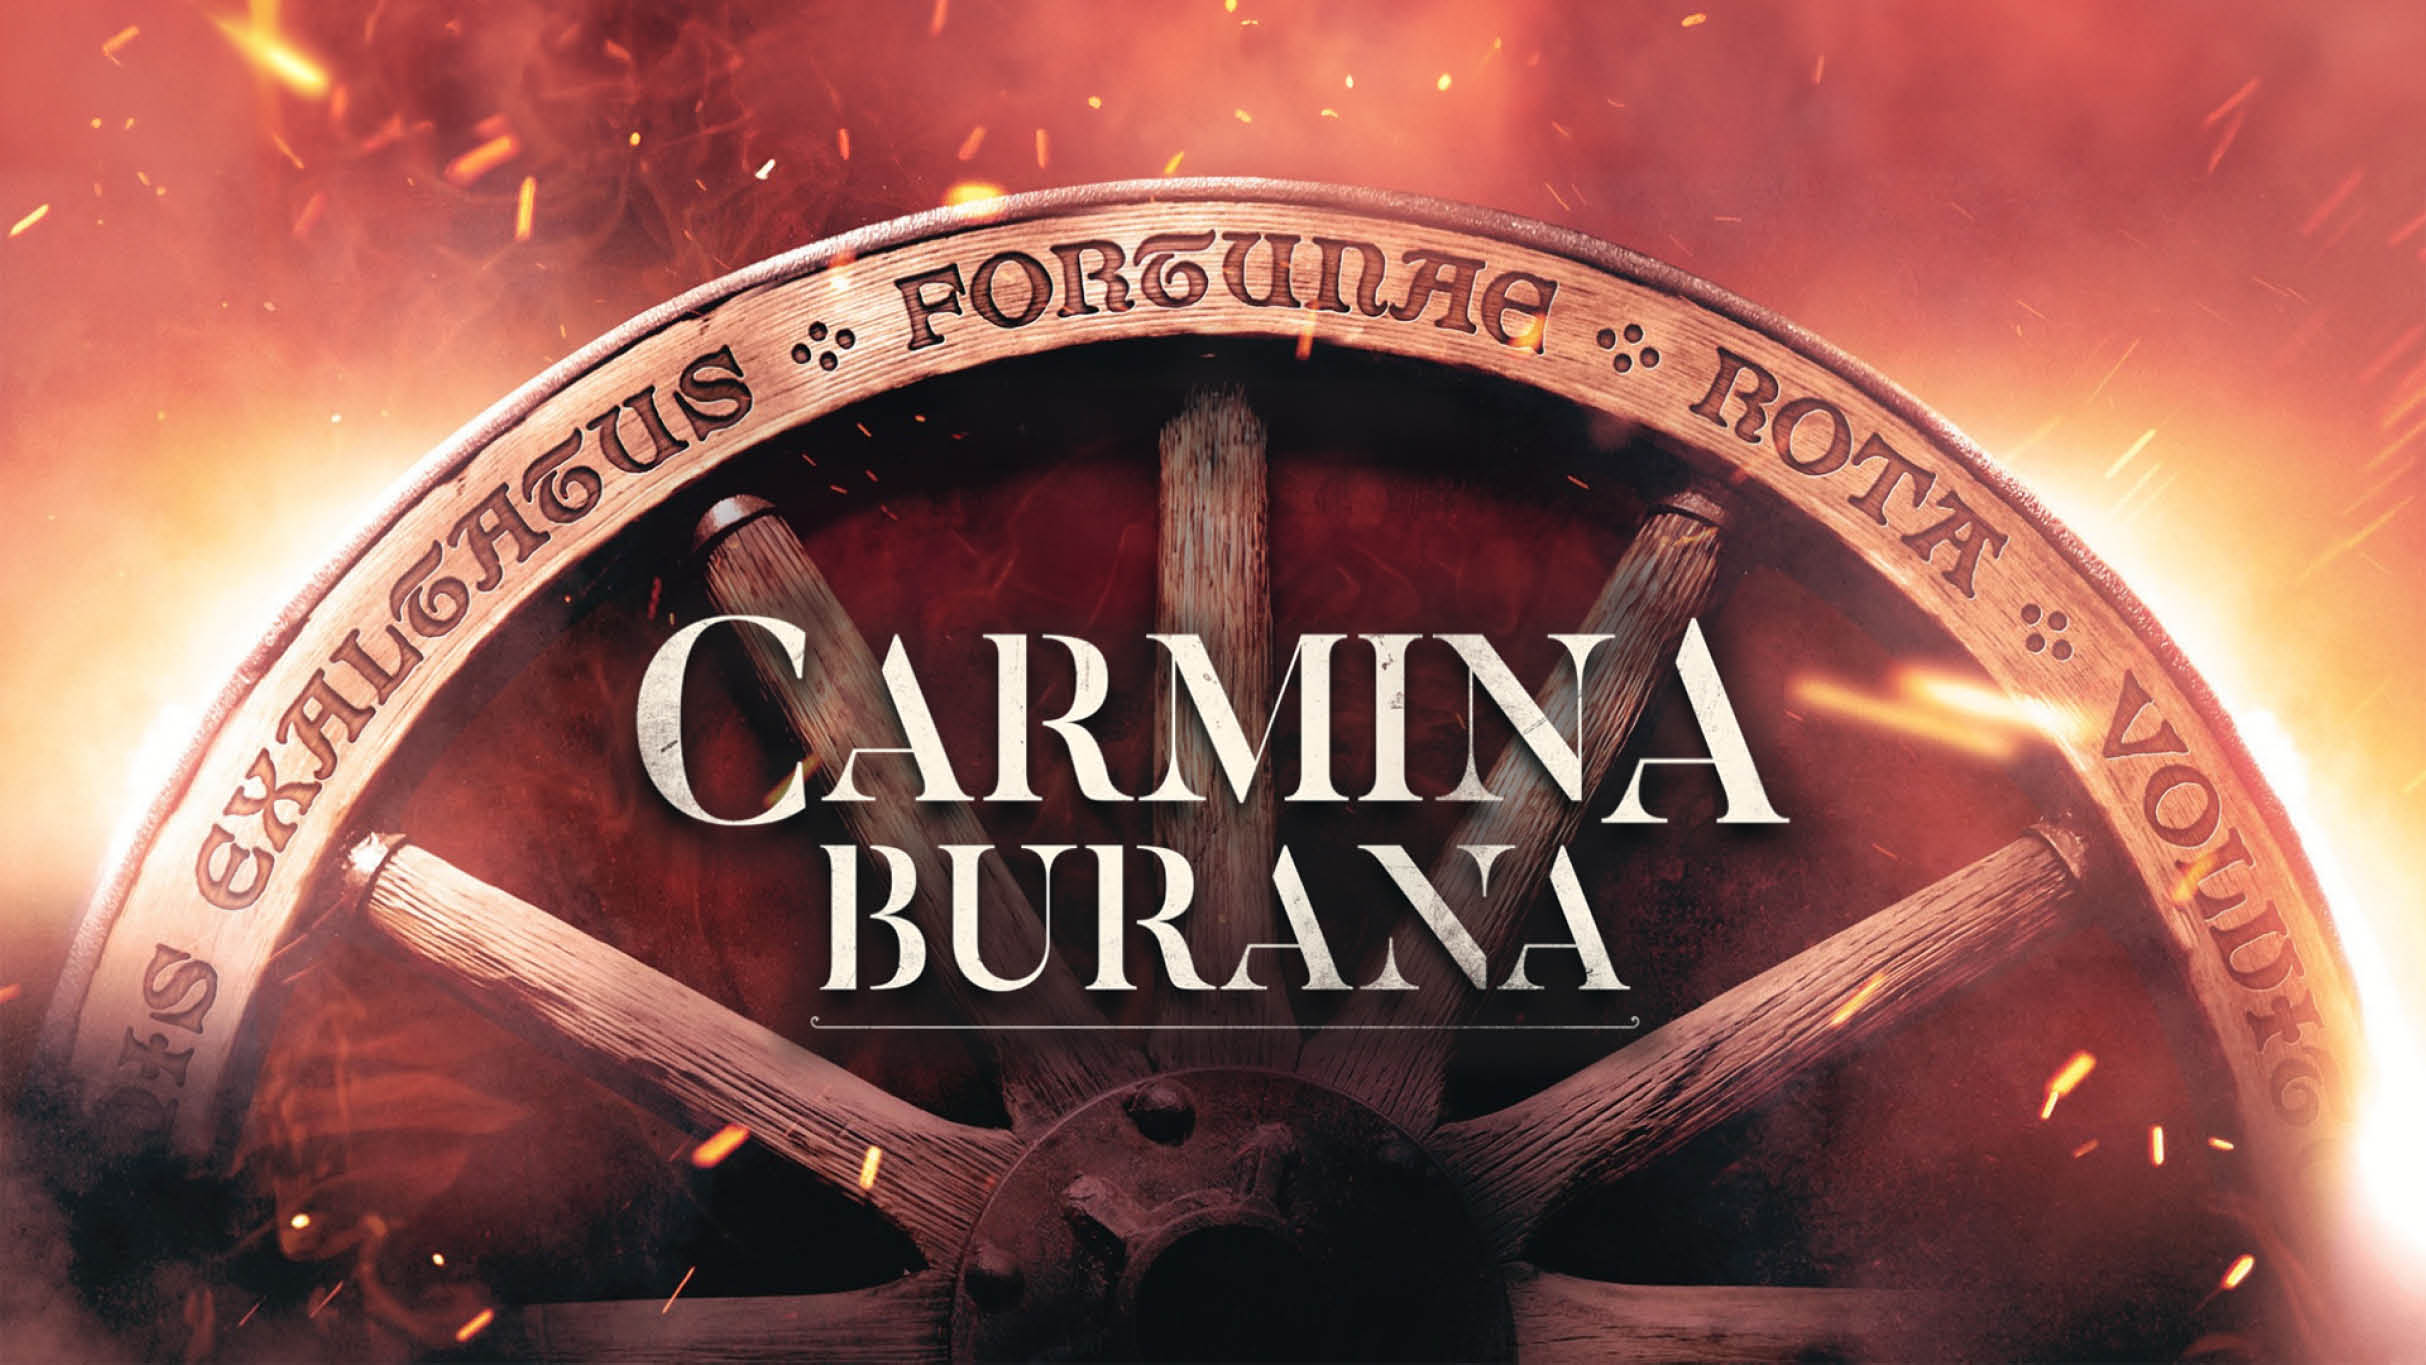 Carmina Burana - Carl Orff presale information on freepresalepasswords.com